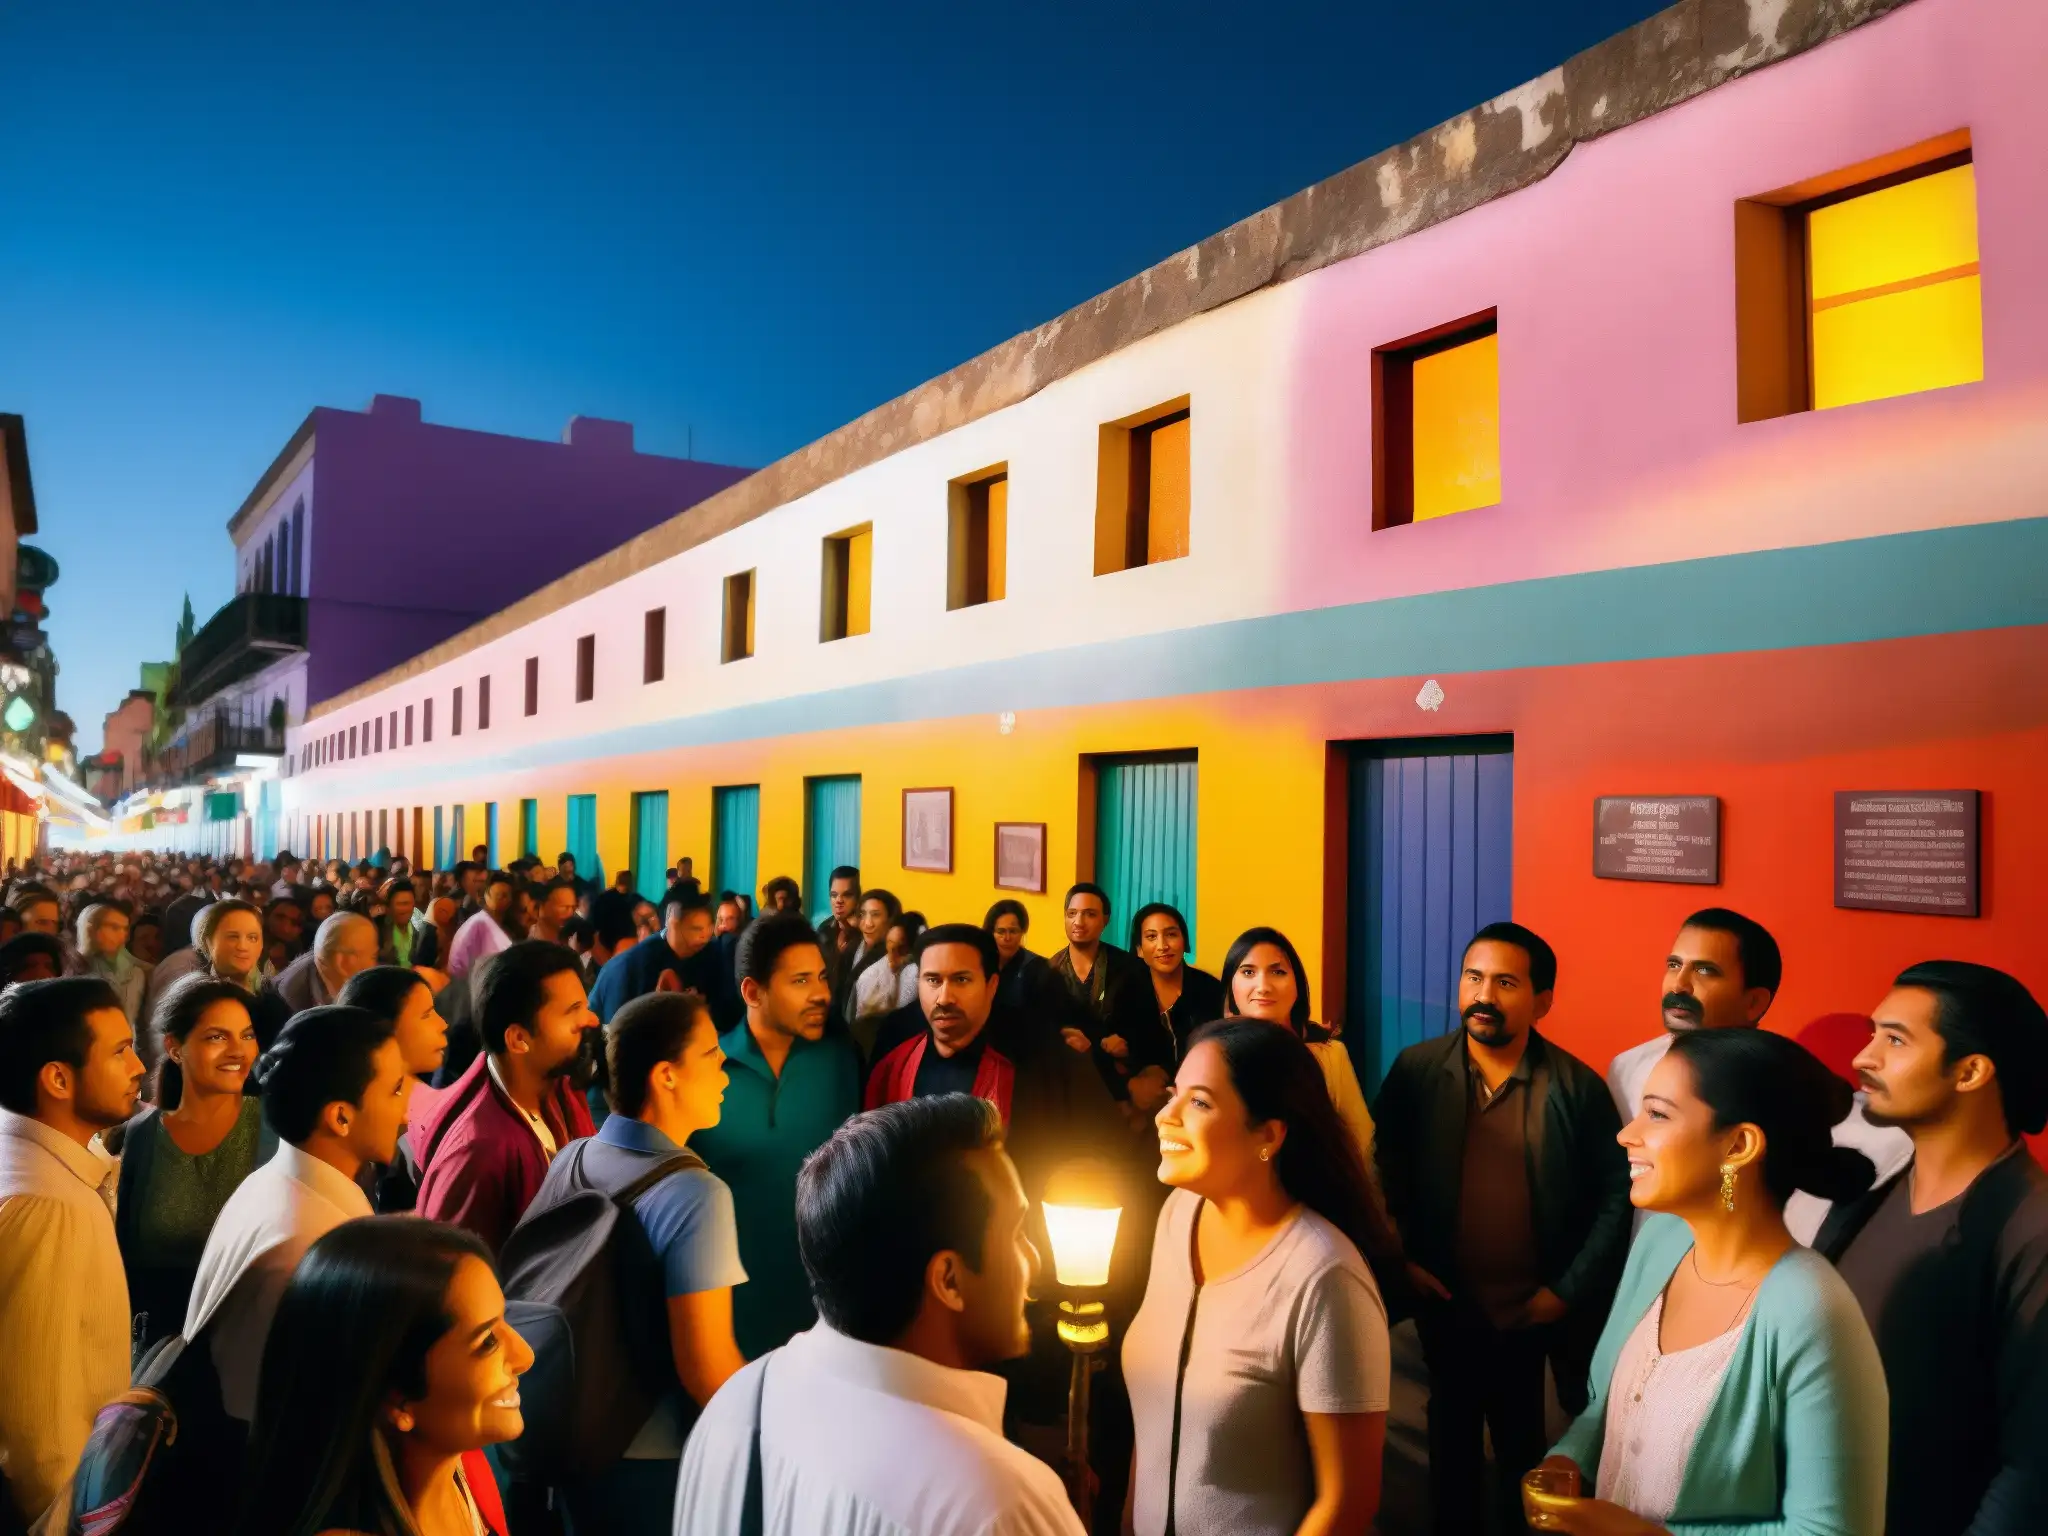 Escena nocturna en México: murales, narrador de historias y grupo de escuchas